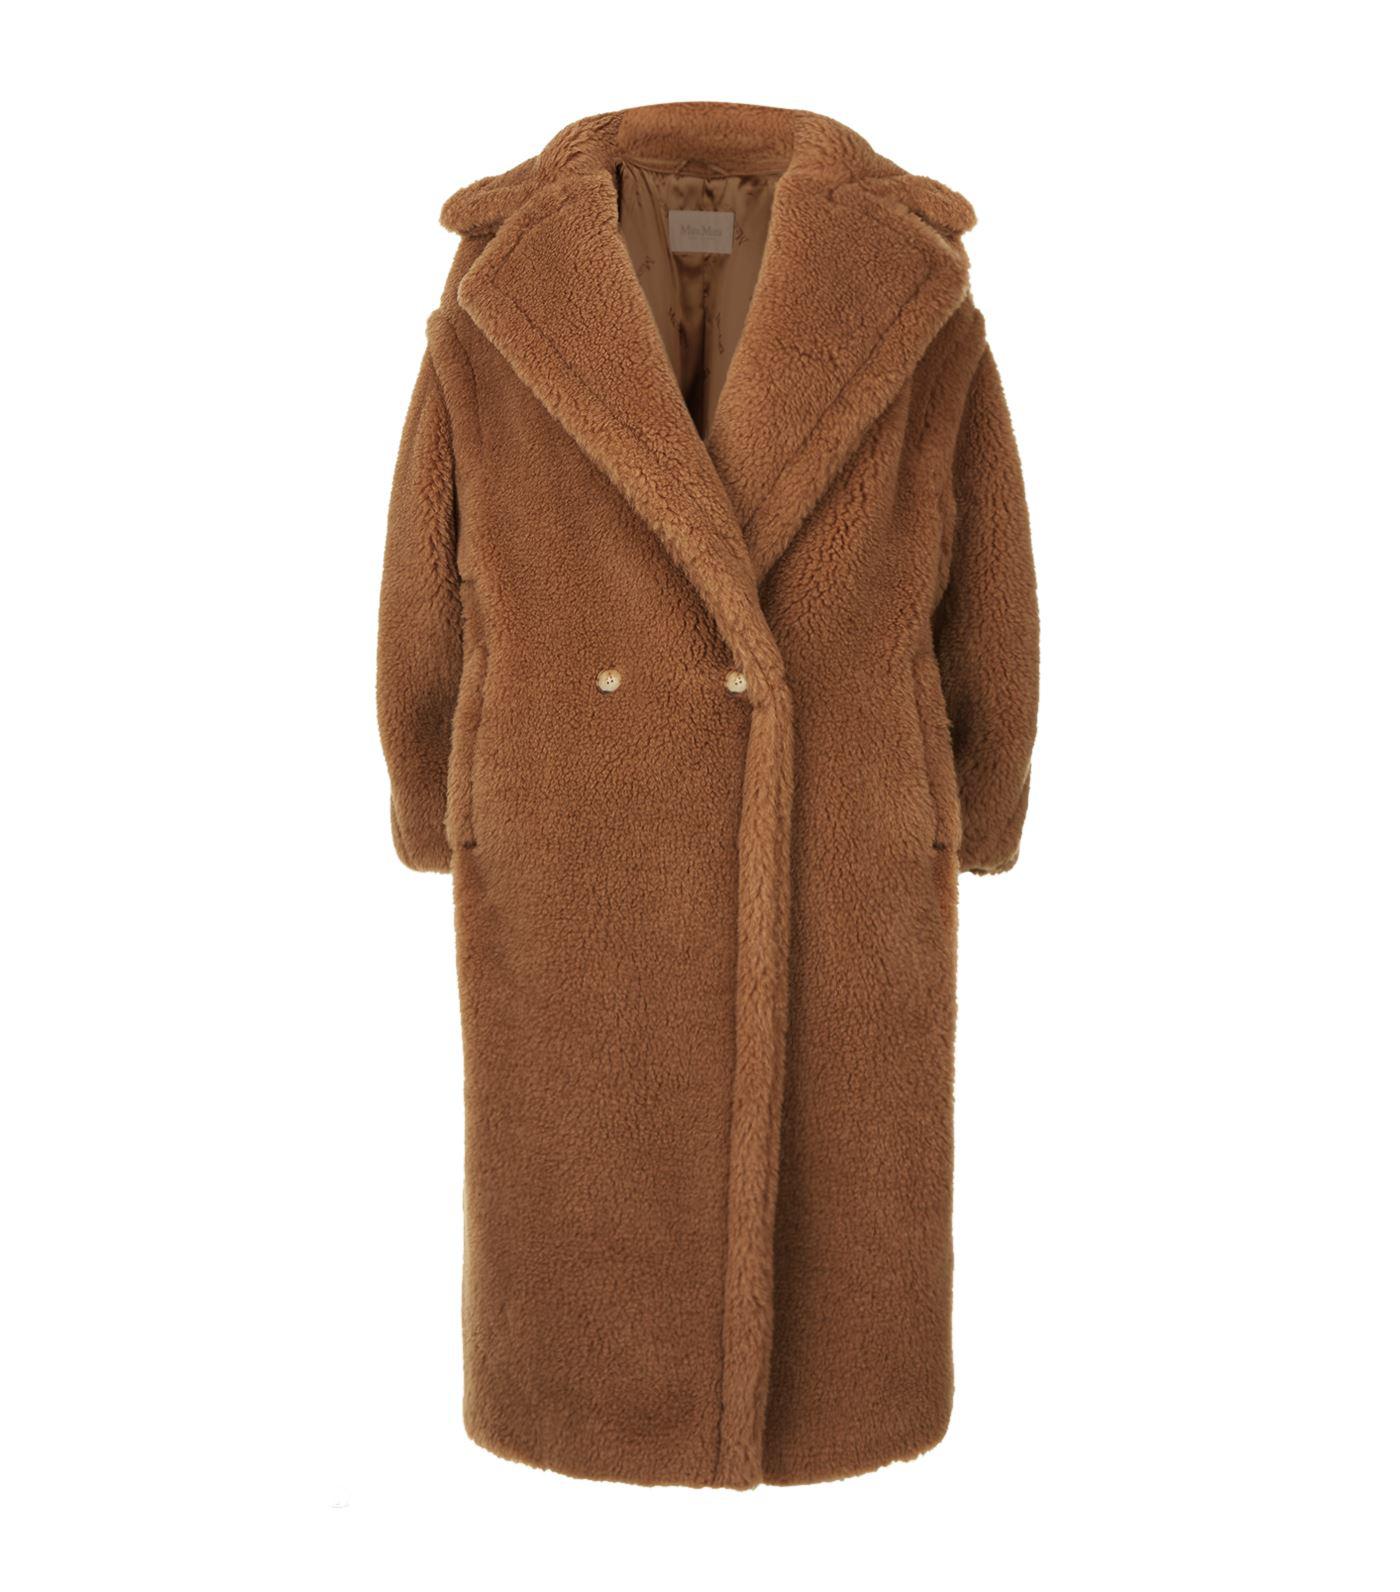 Lyst - Max Mara Silk-camel Teddy Coat in Natural